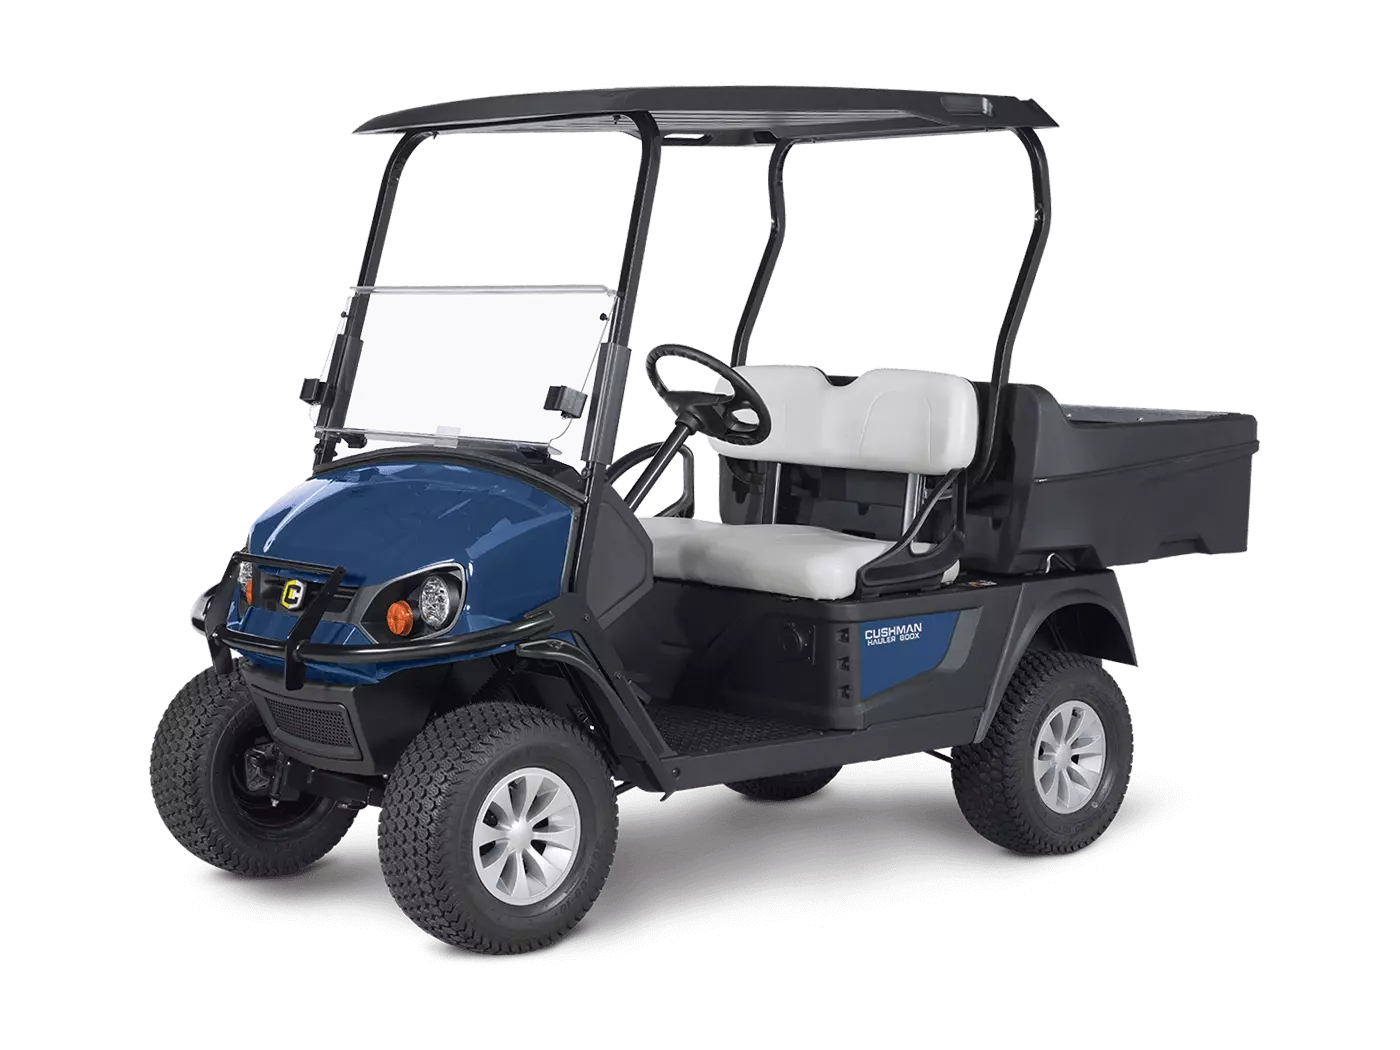 Utility golf cart rentals